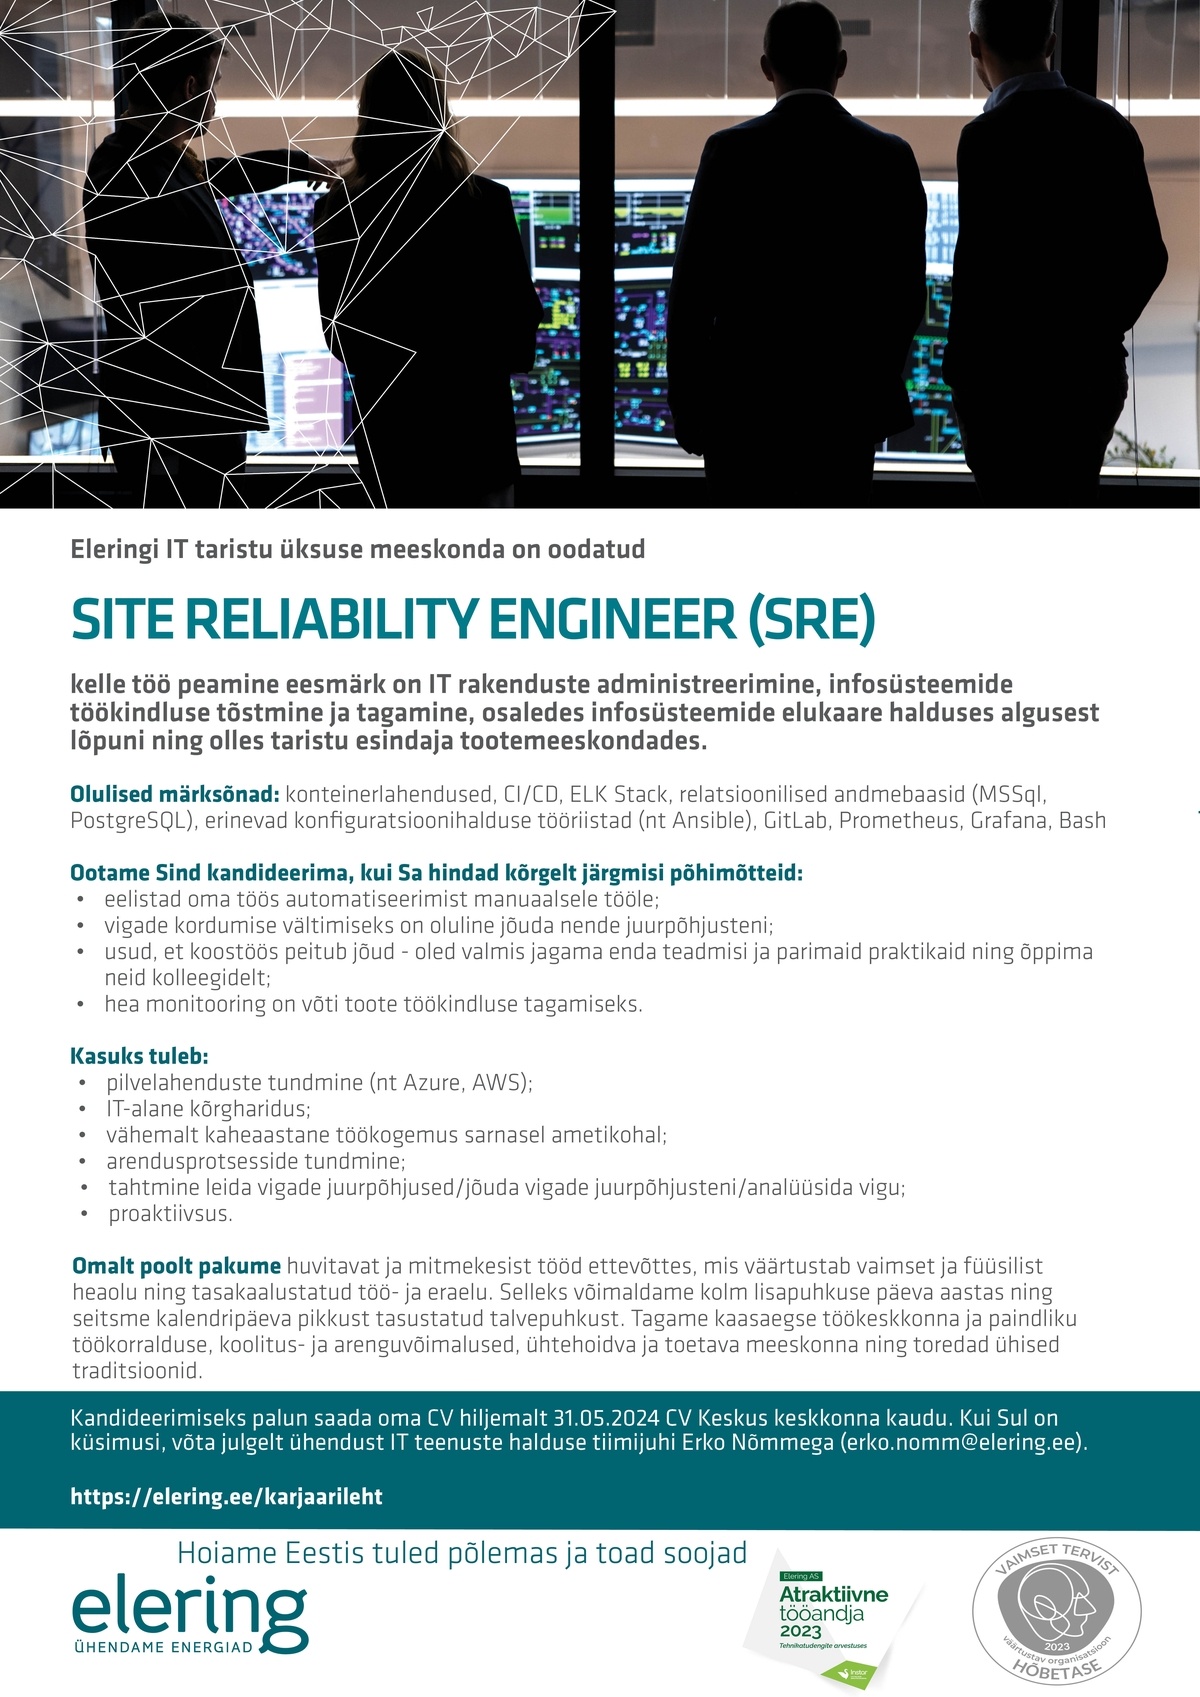 ELERING AS Site Reliability Engineer (SRE)